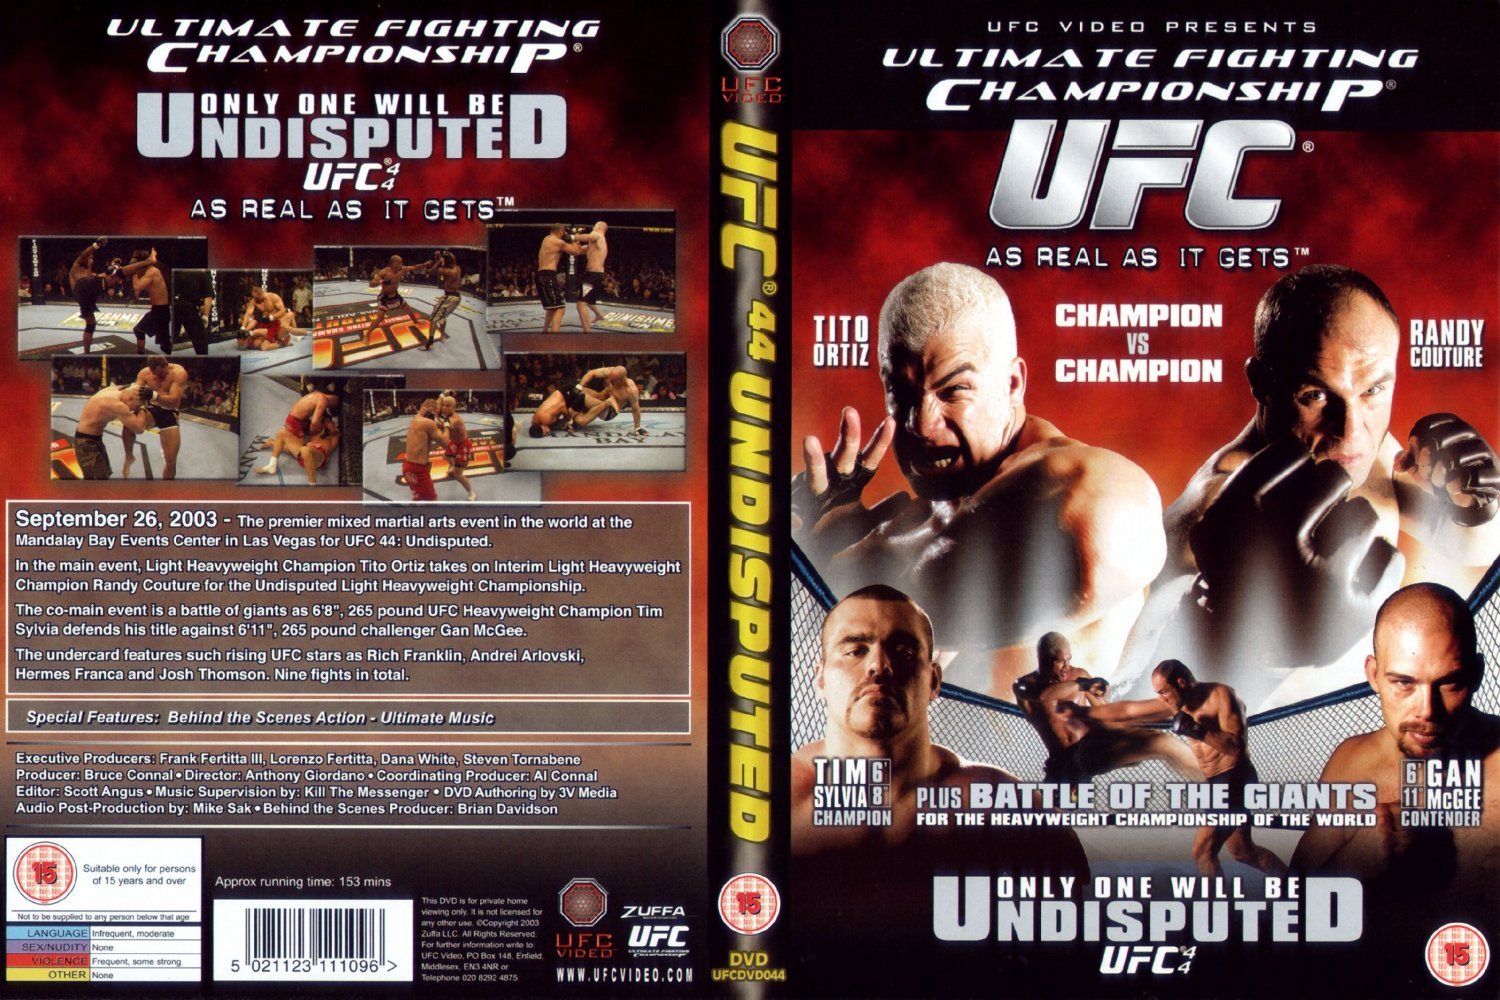 Jaquette DVD Ufc 44 undisputed